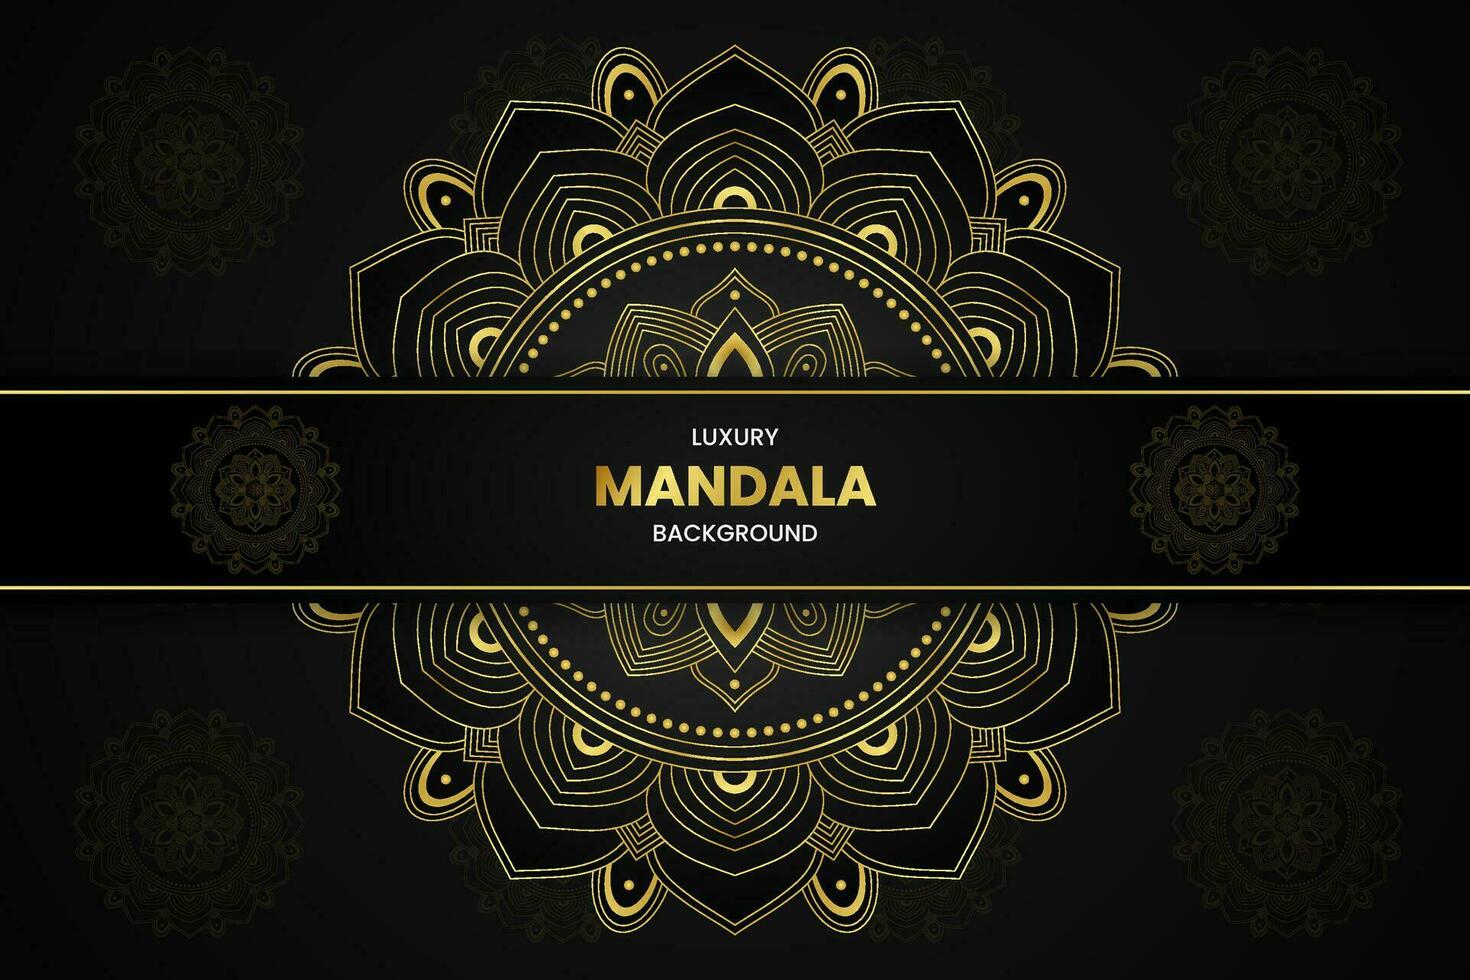 New Luxury Mandala Background Template .Mandala Art Design Template vector